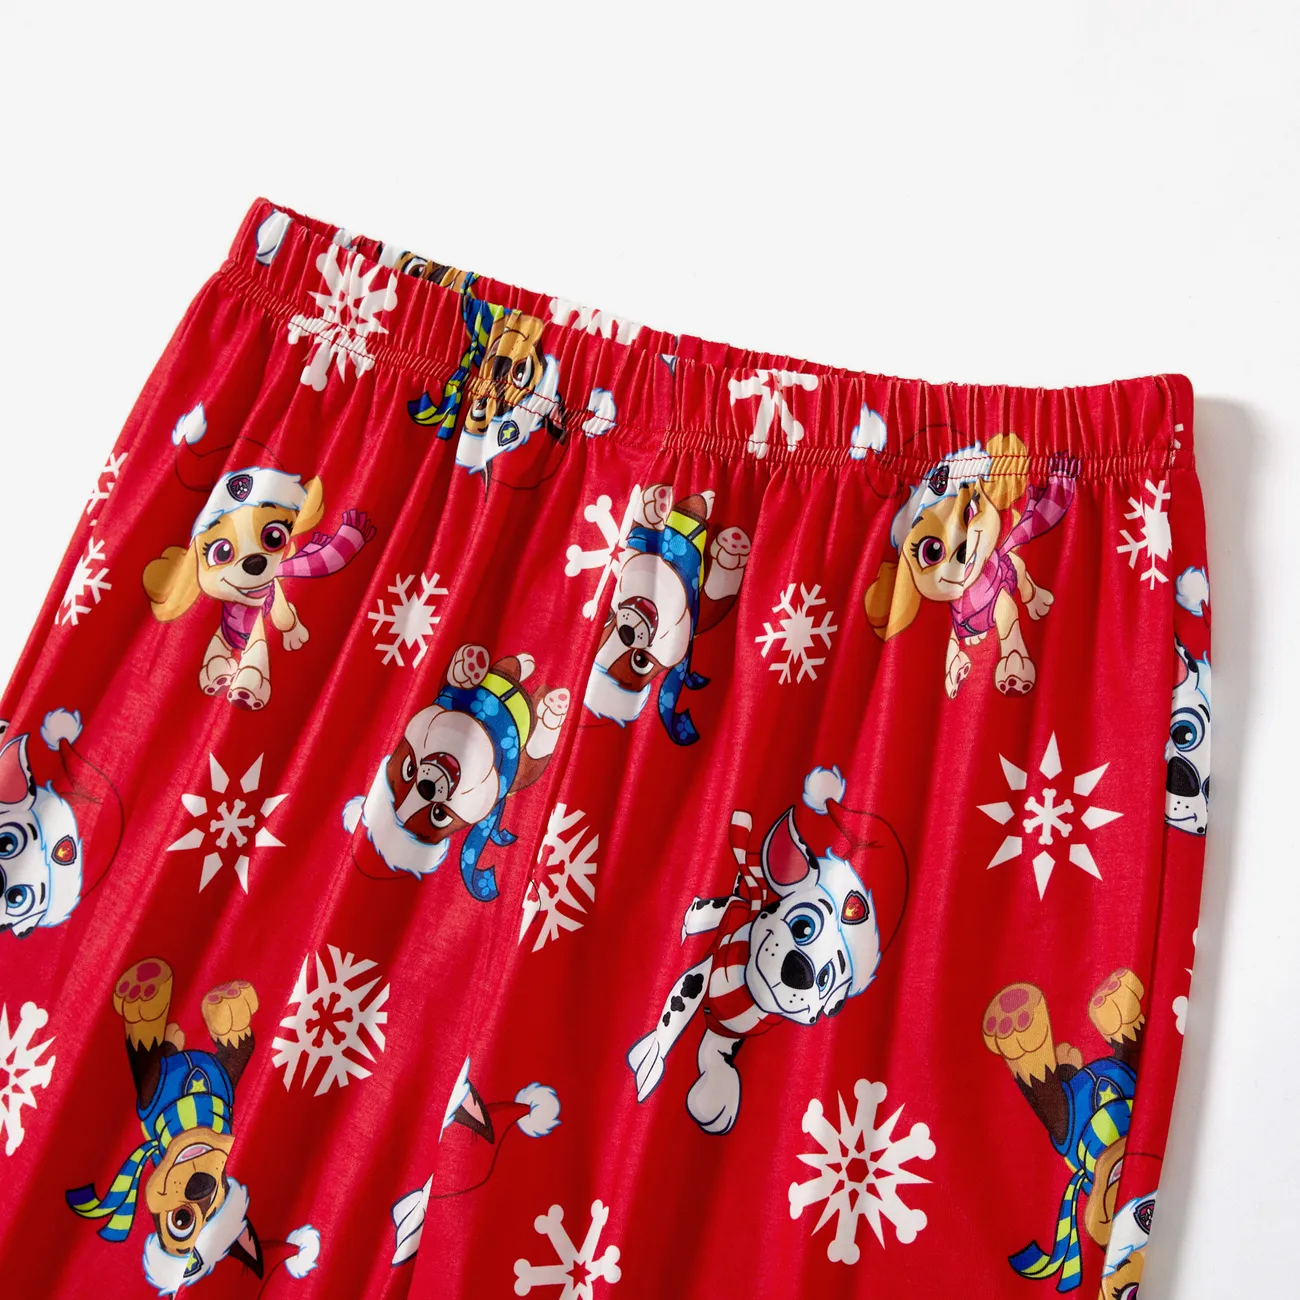 Helfer auf vier Pfoten Weihnachten Familien-Looks Langärmelig Familien-Outfits Pyjamas (Flame Resistant) Mehrfarbig big image 1